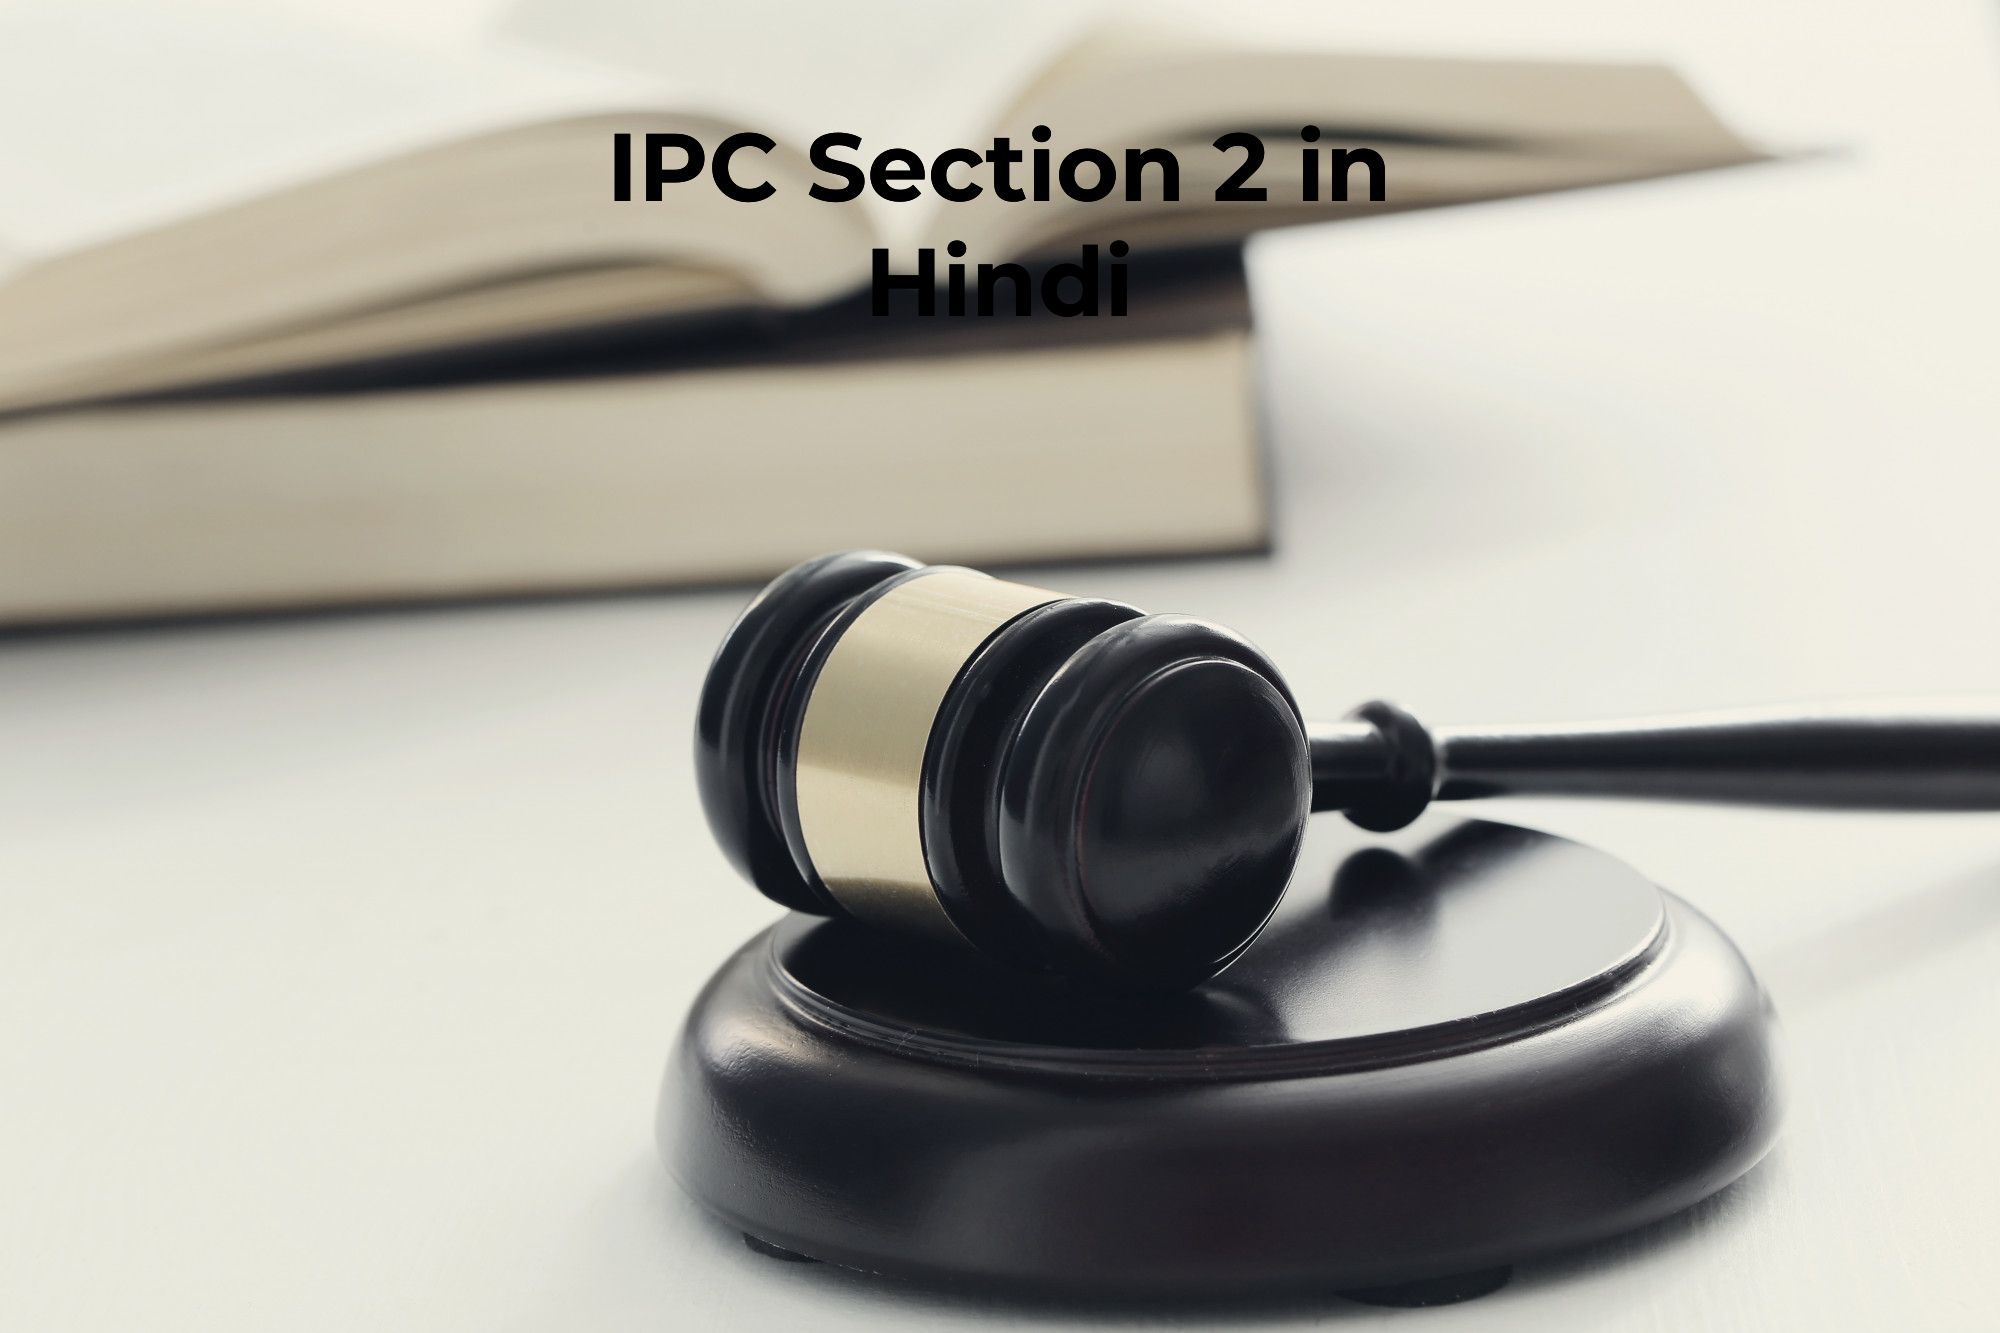 IPC Section 2 in Hindi